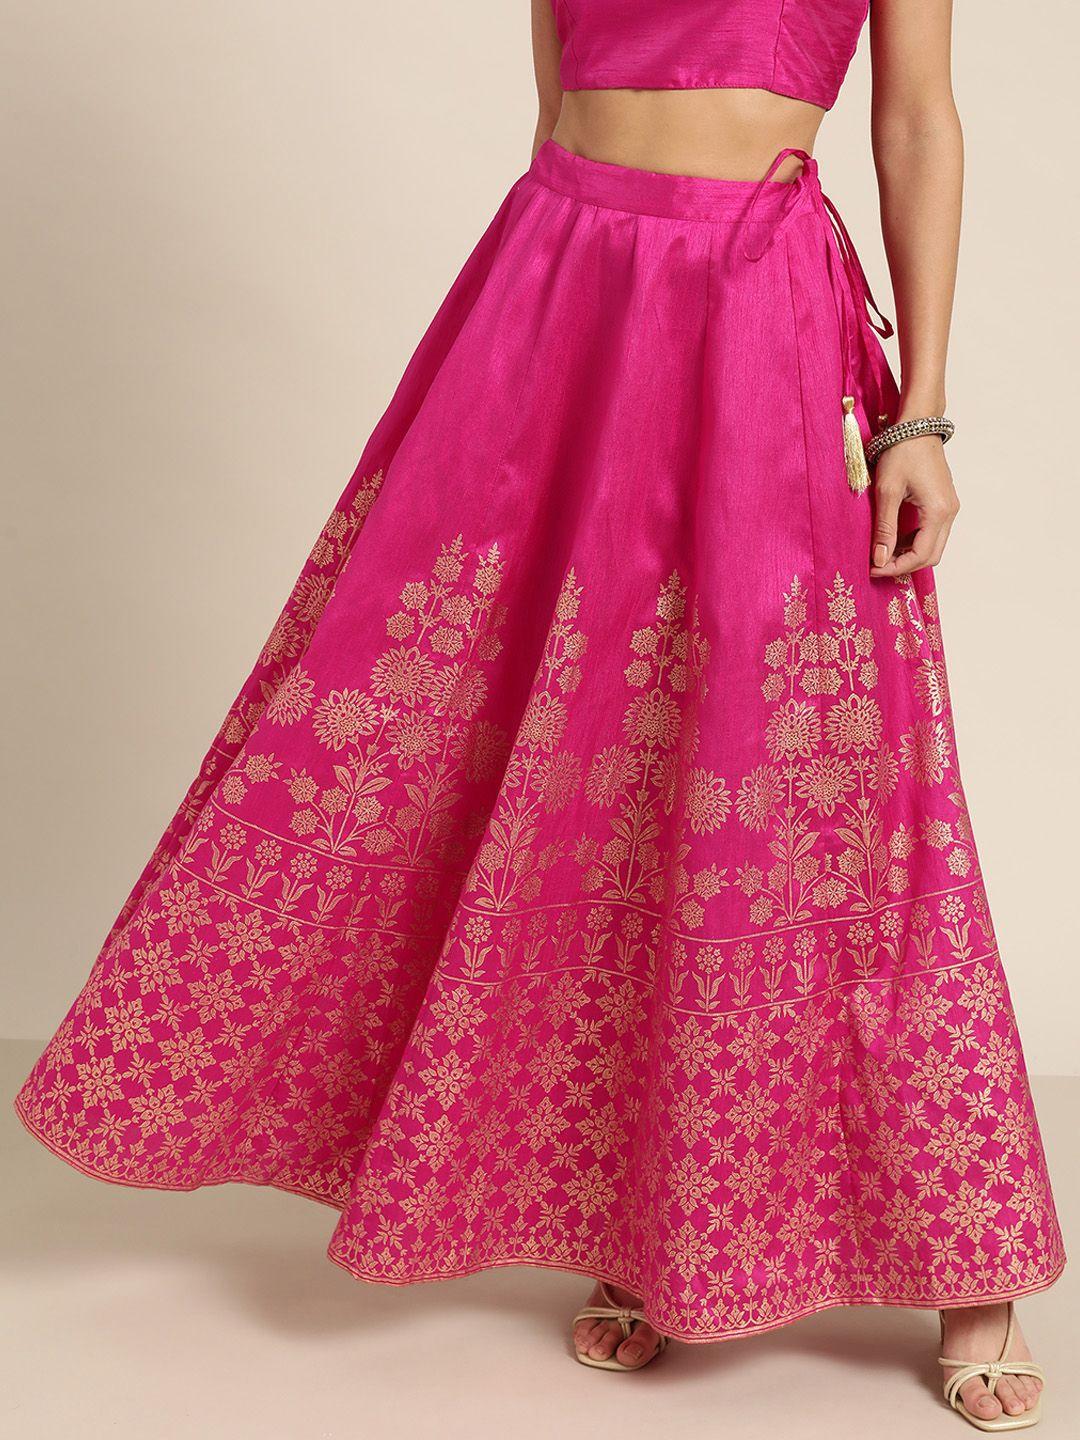 shae by sassafras pink & golden foil print flared maxi skirt